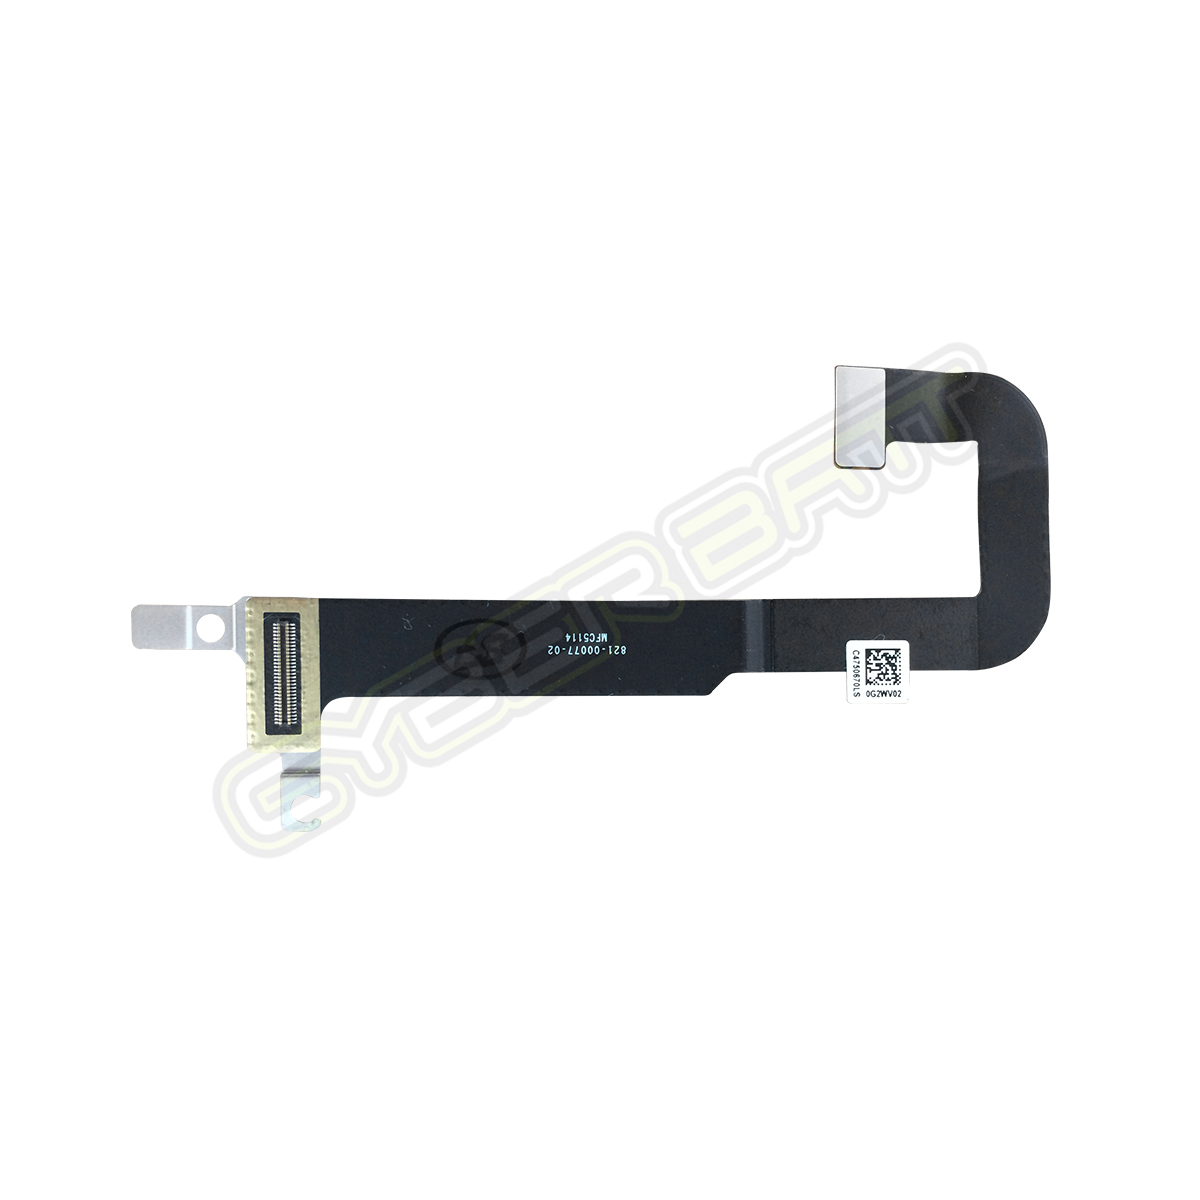 I/O USB-C BOARD MacBook Retina 12 inch A1534 Early 2015